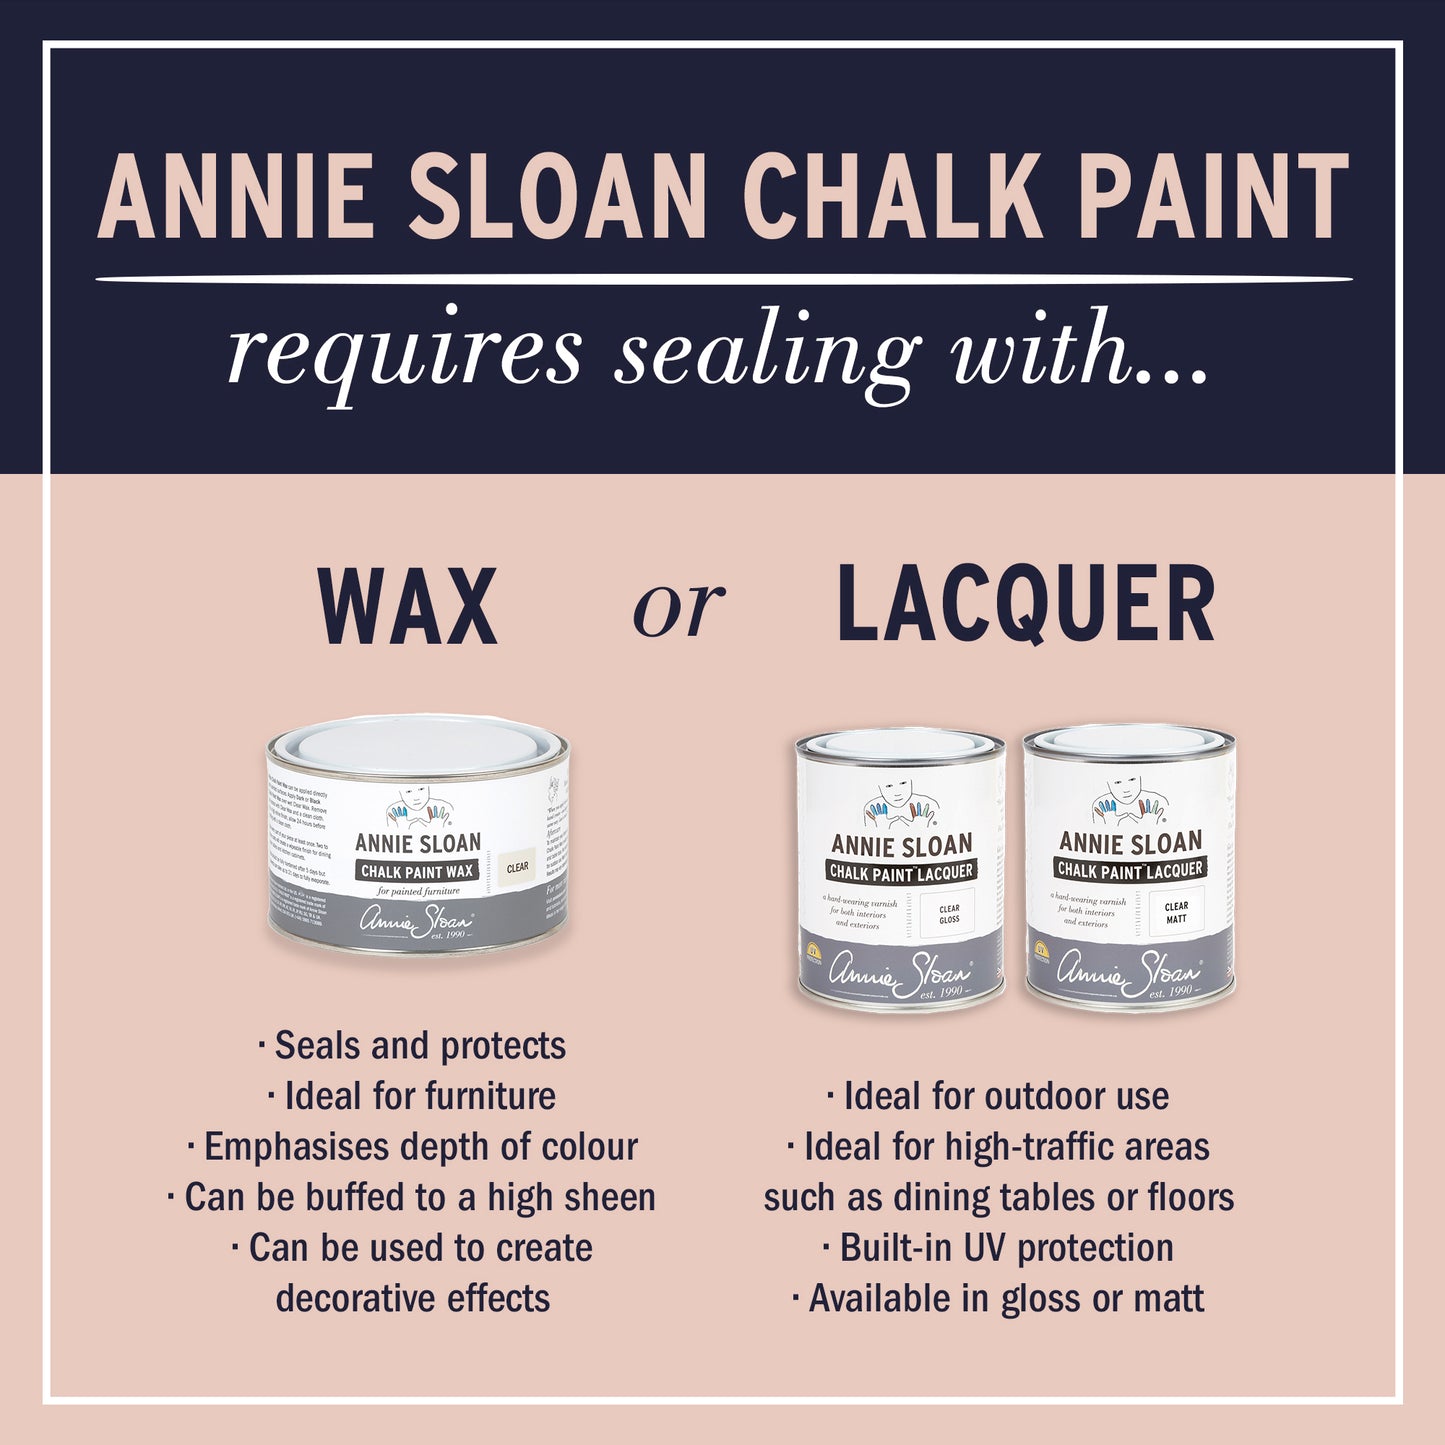 Annie Sloan Chalk Paint® CAPABILITY GREEN